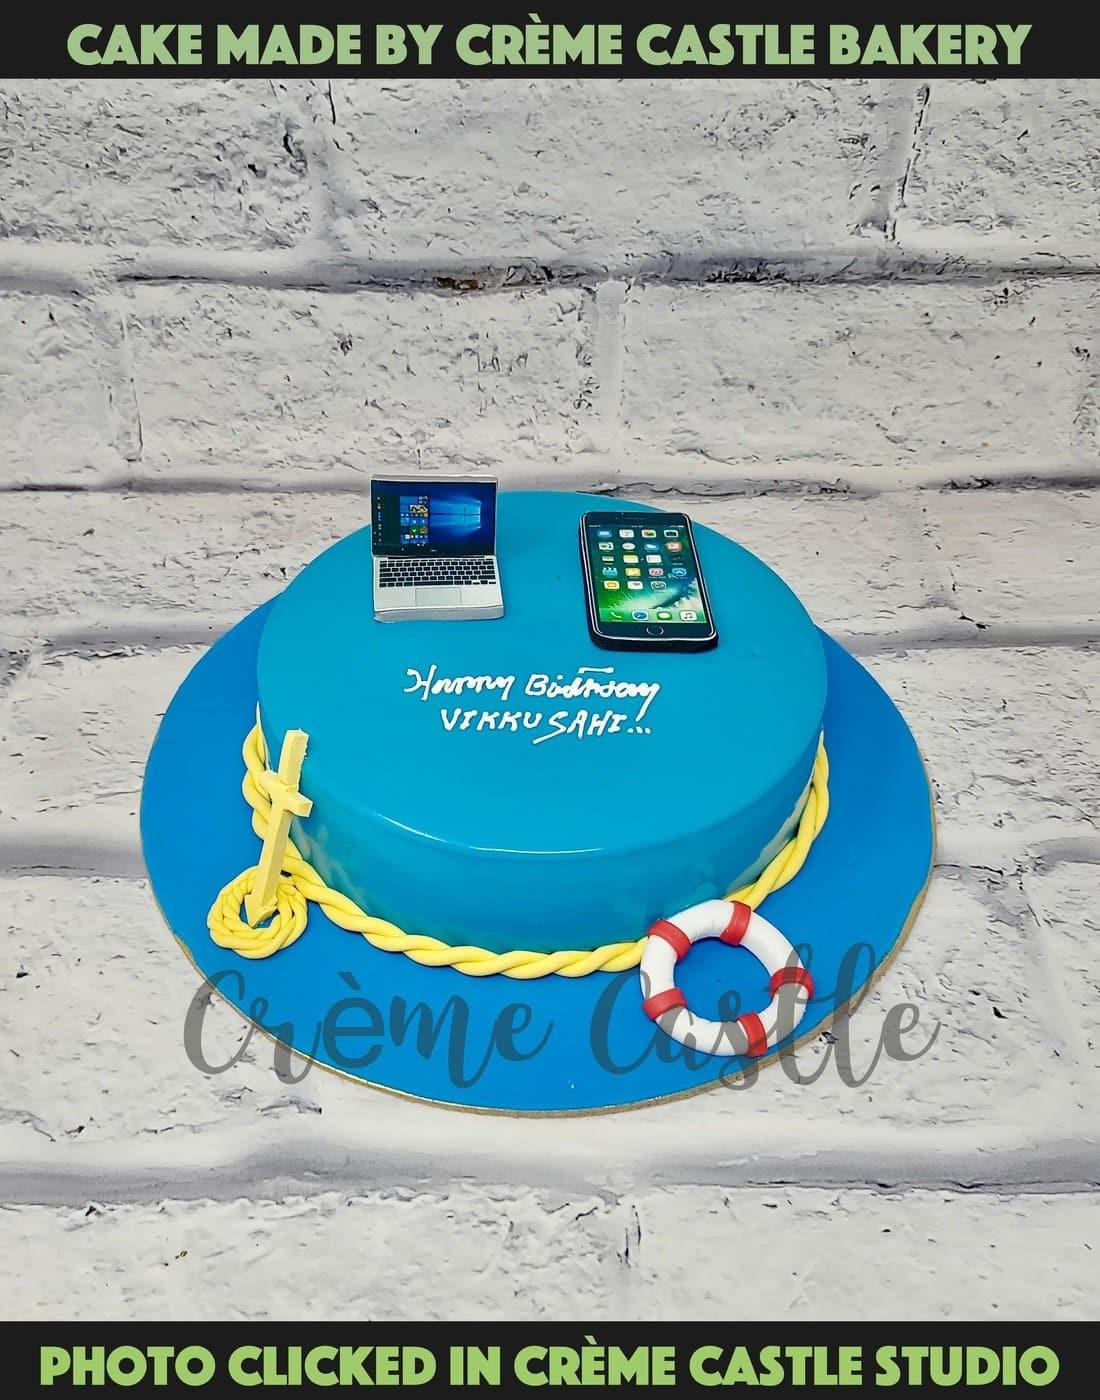 Buy/Send Phone Cake Design Online @ Rs. 3299 - SendBestGift